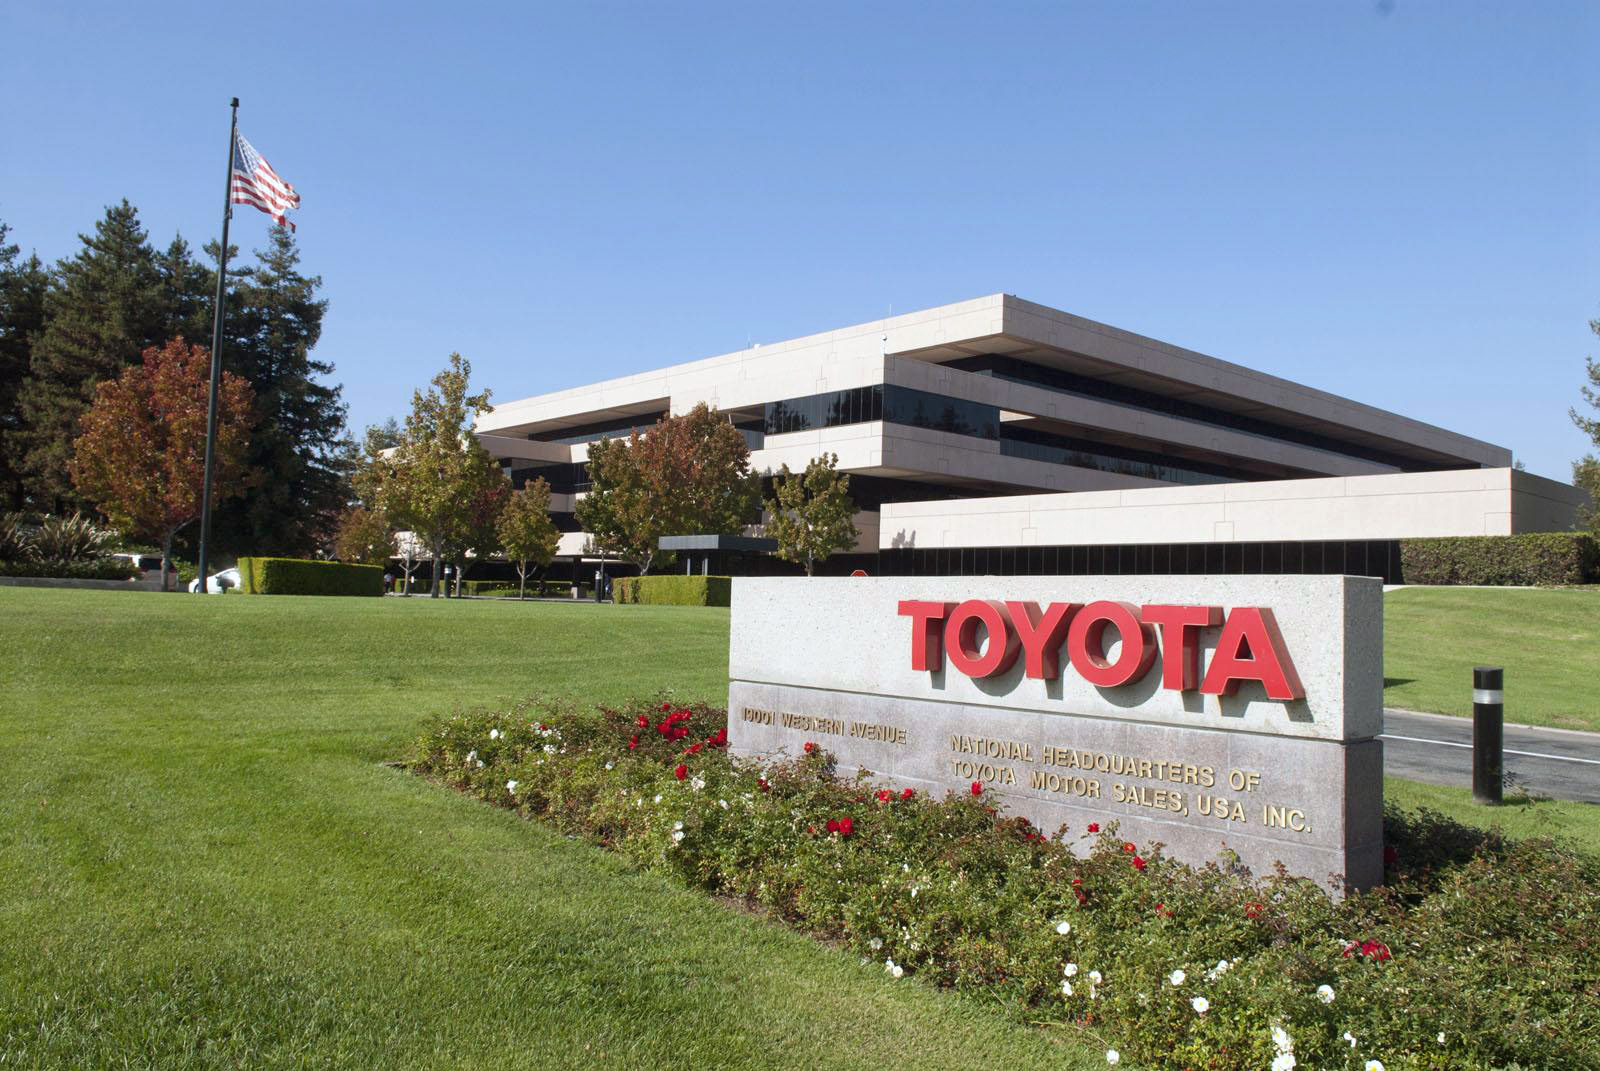 Toyota motor sales torrance california